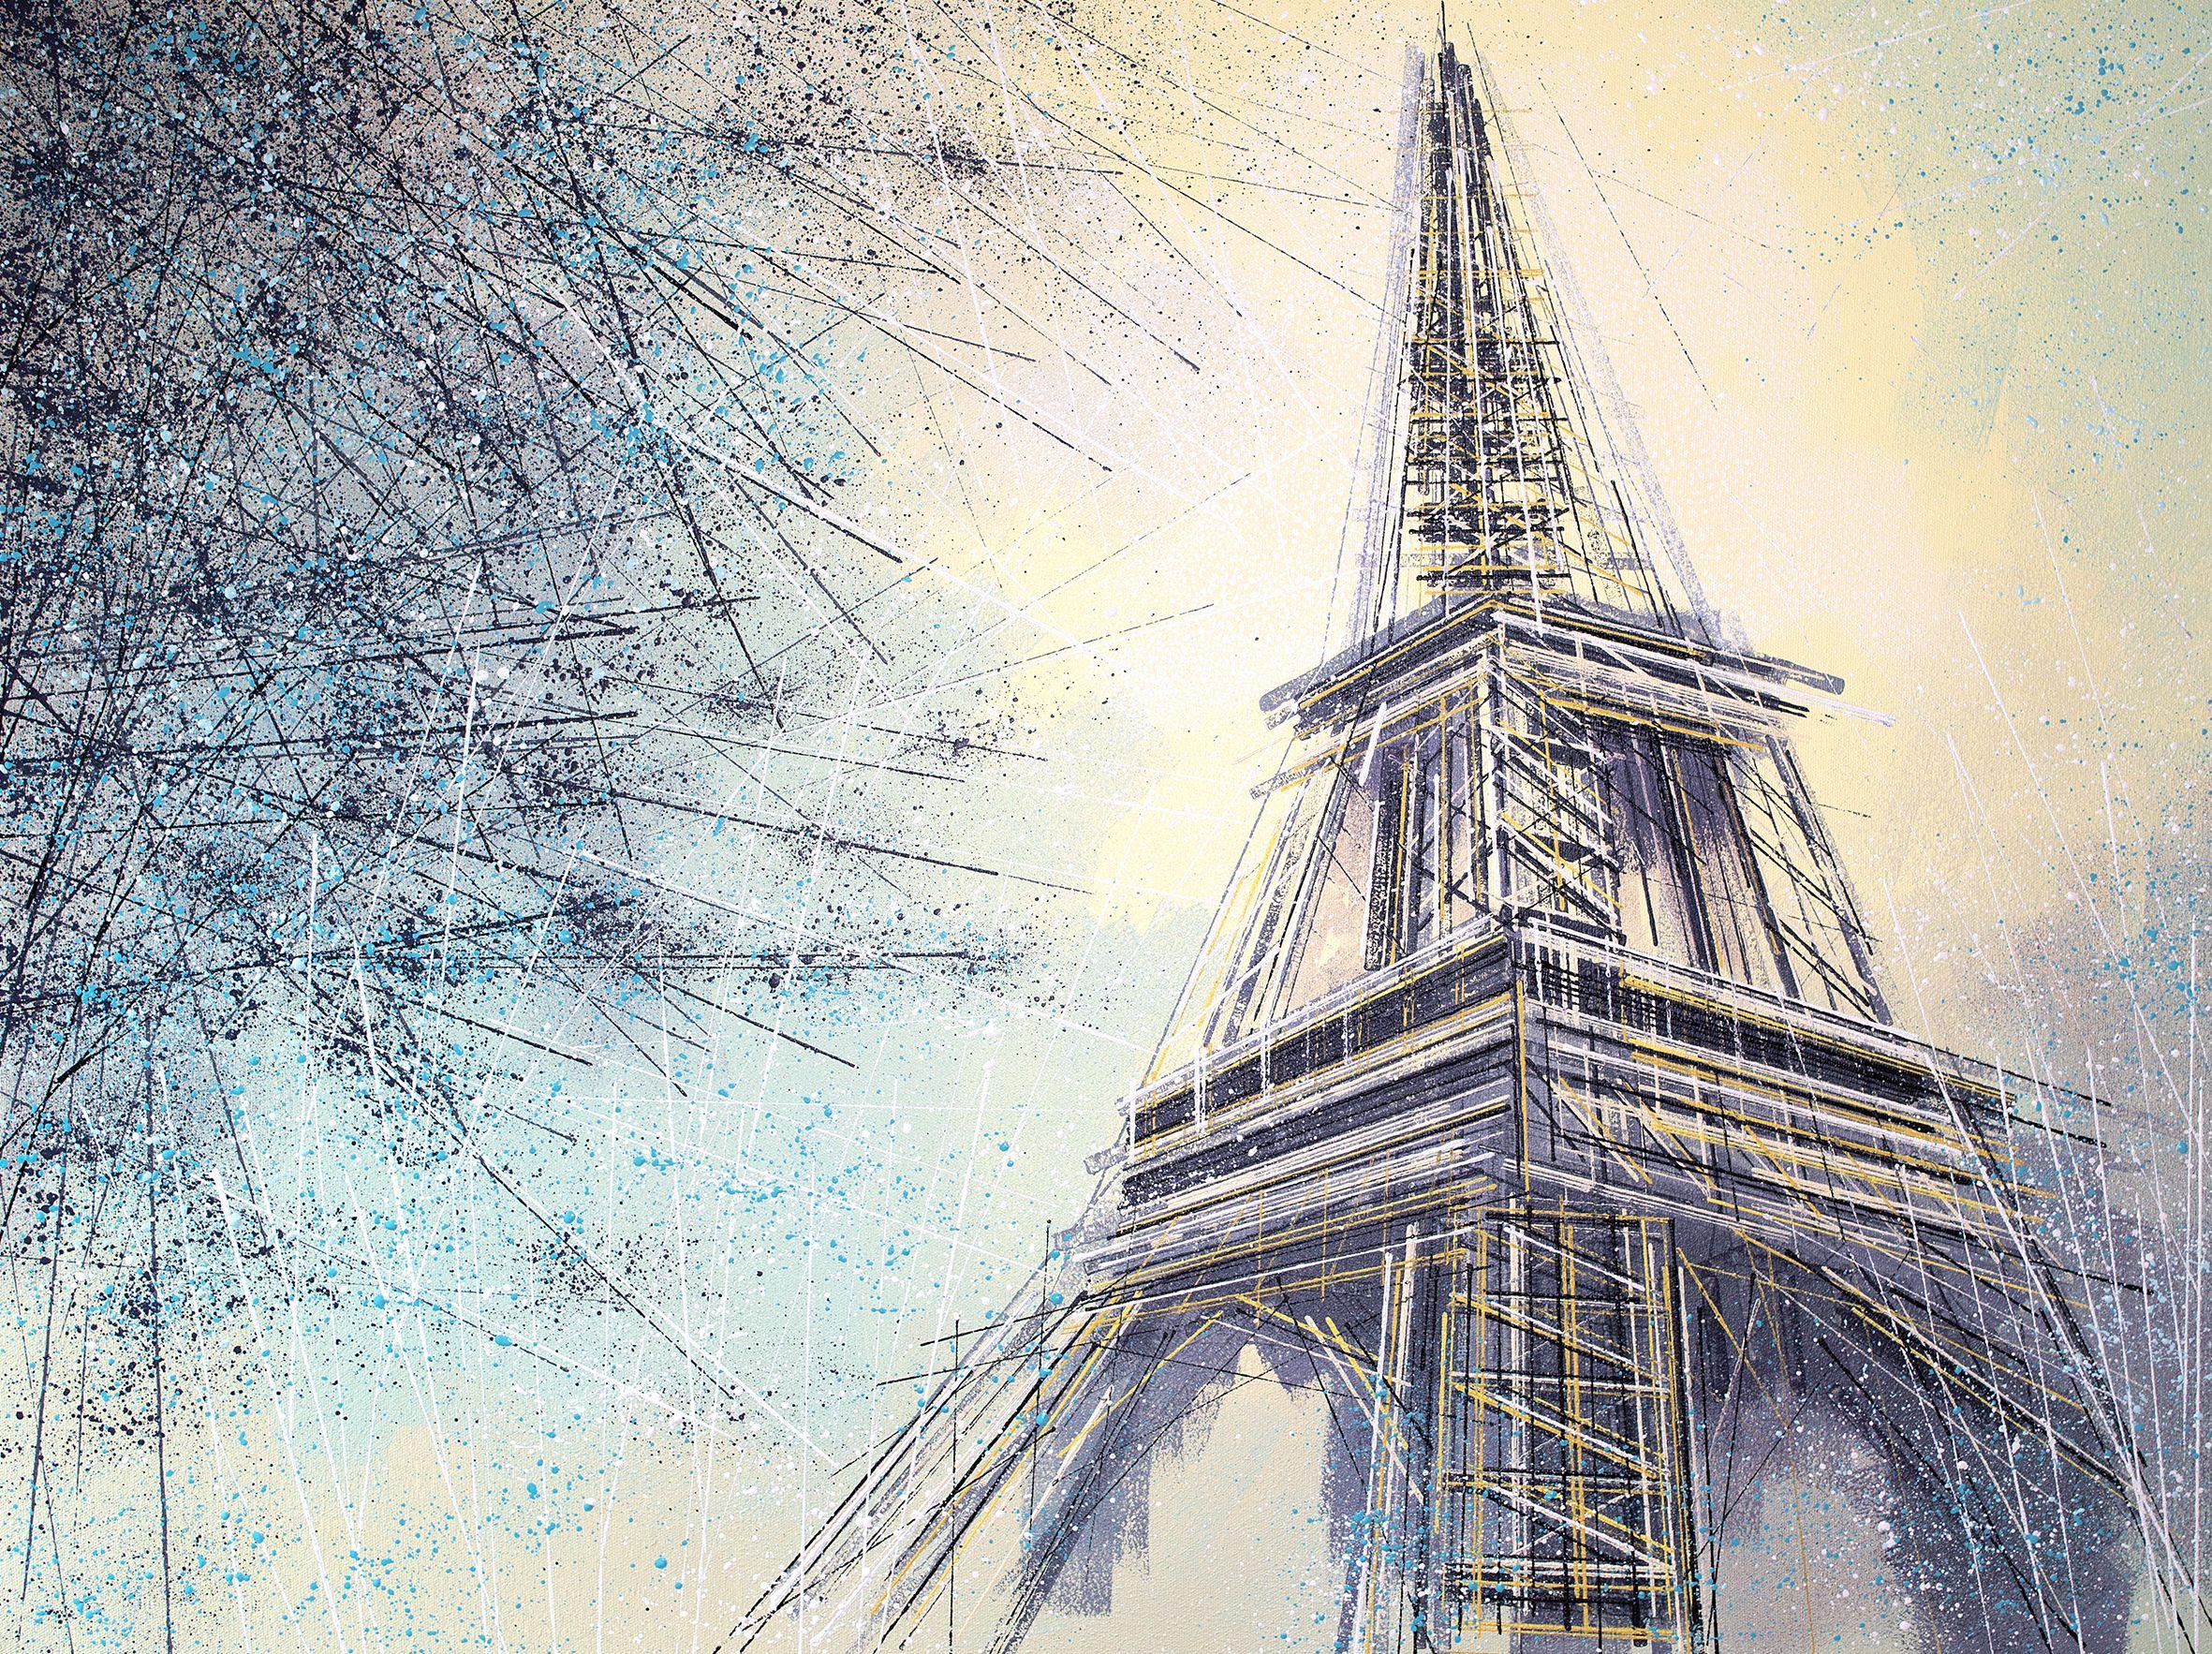 Paris- The Eiffel Tower At Dusk, Painting, Acrylic on Canvas